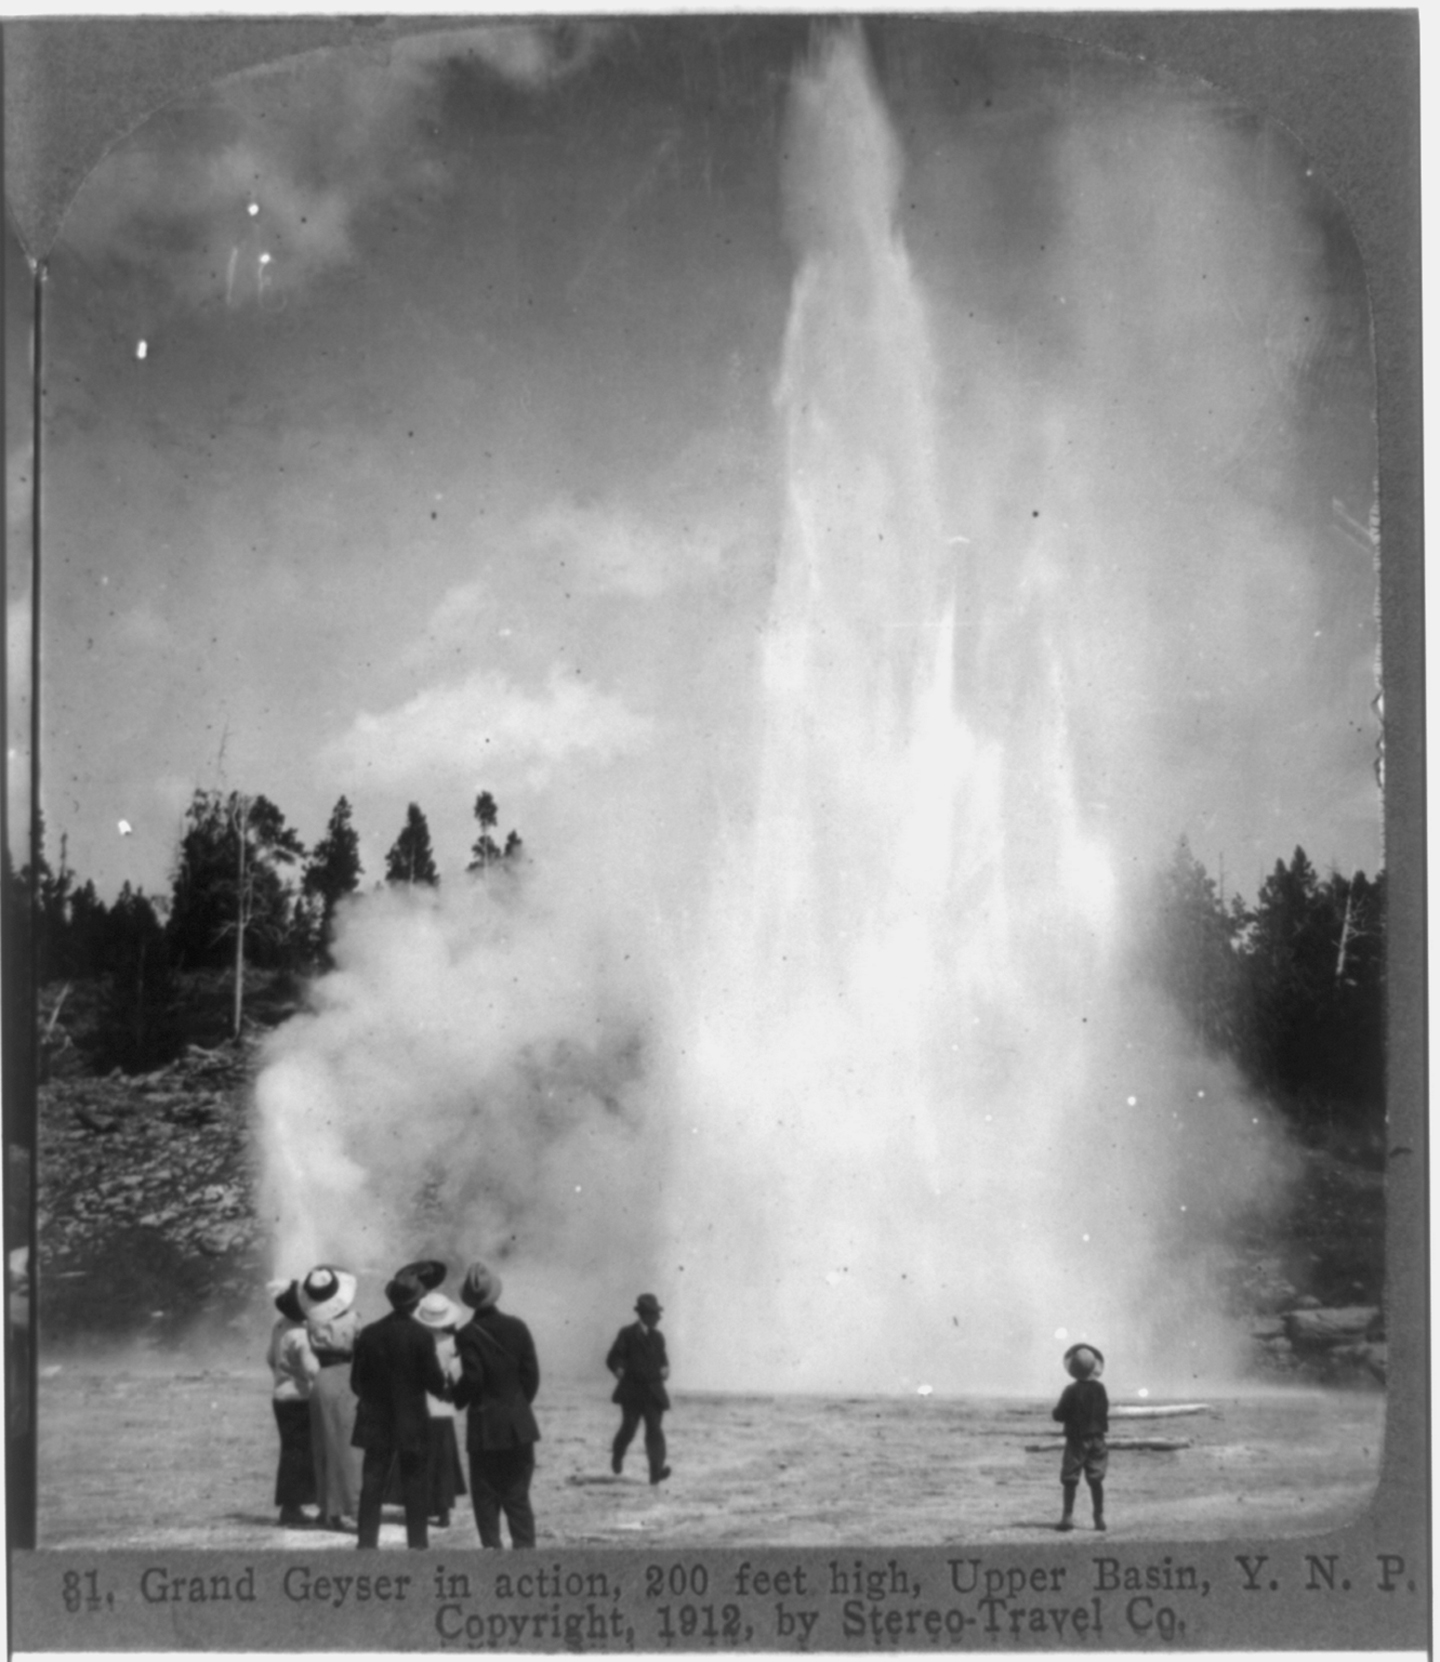 a group of onlookers watch a geyser erupt